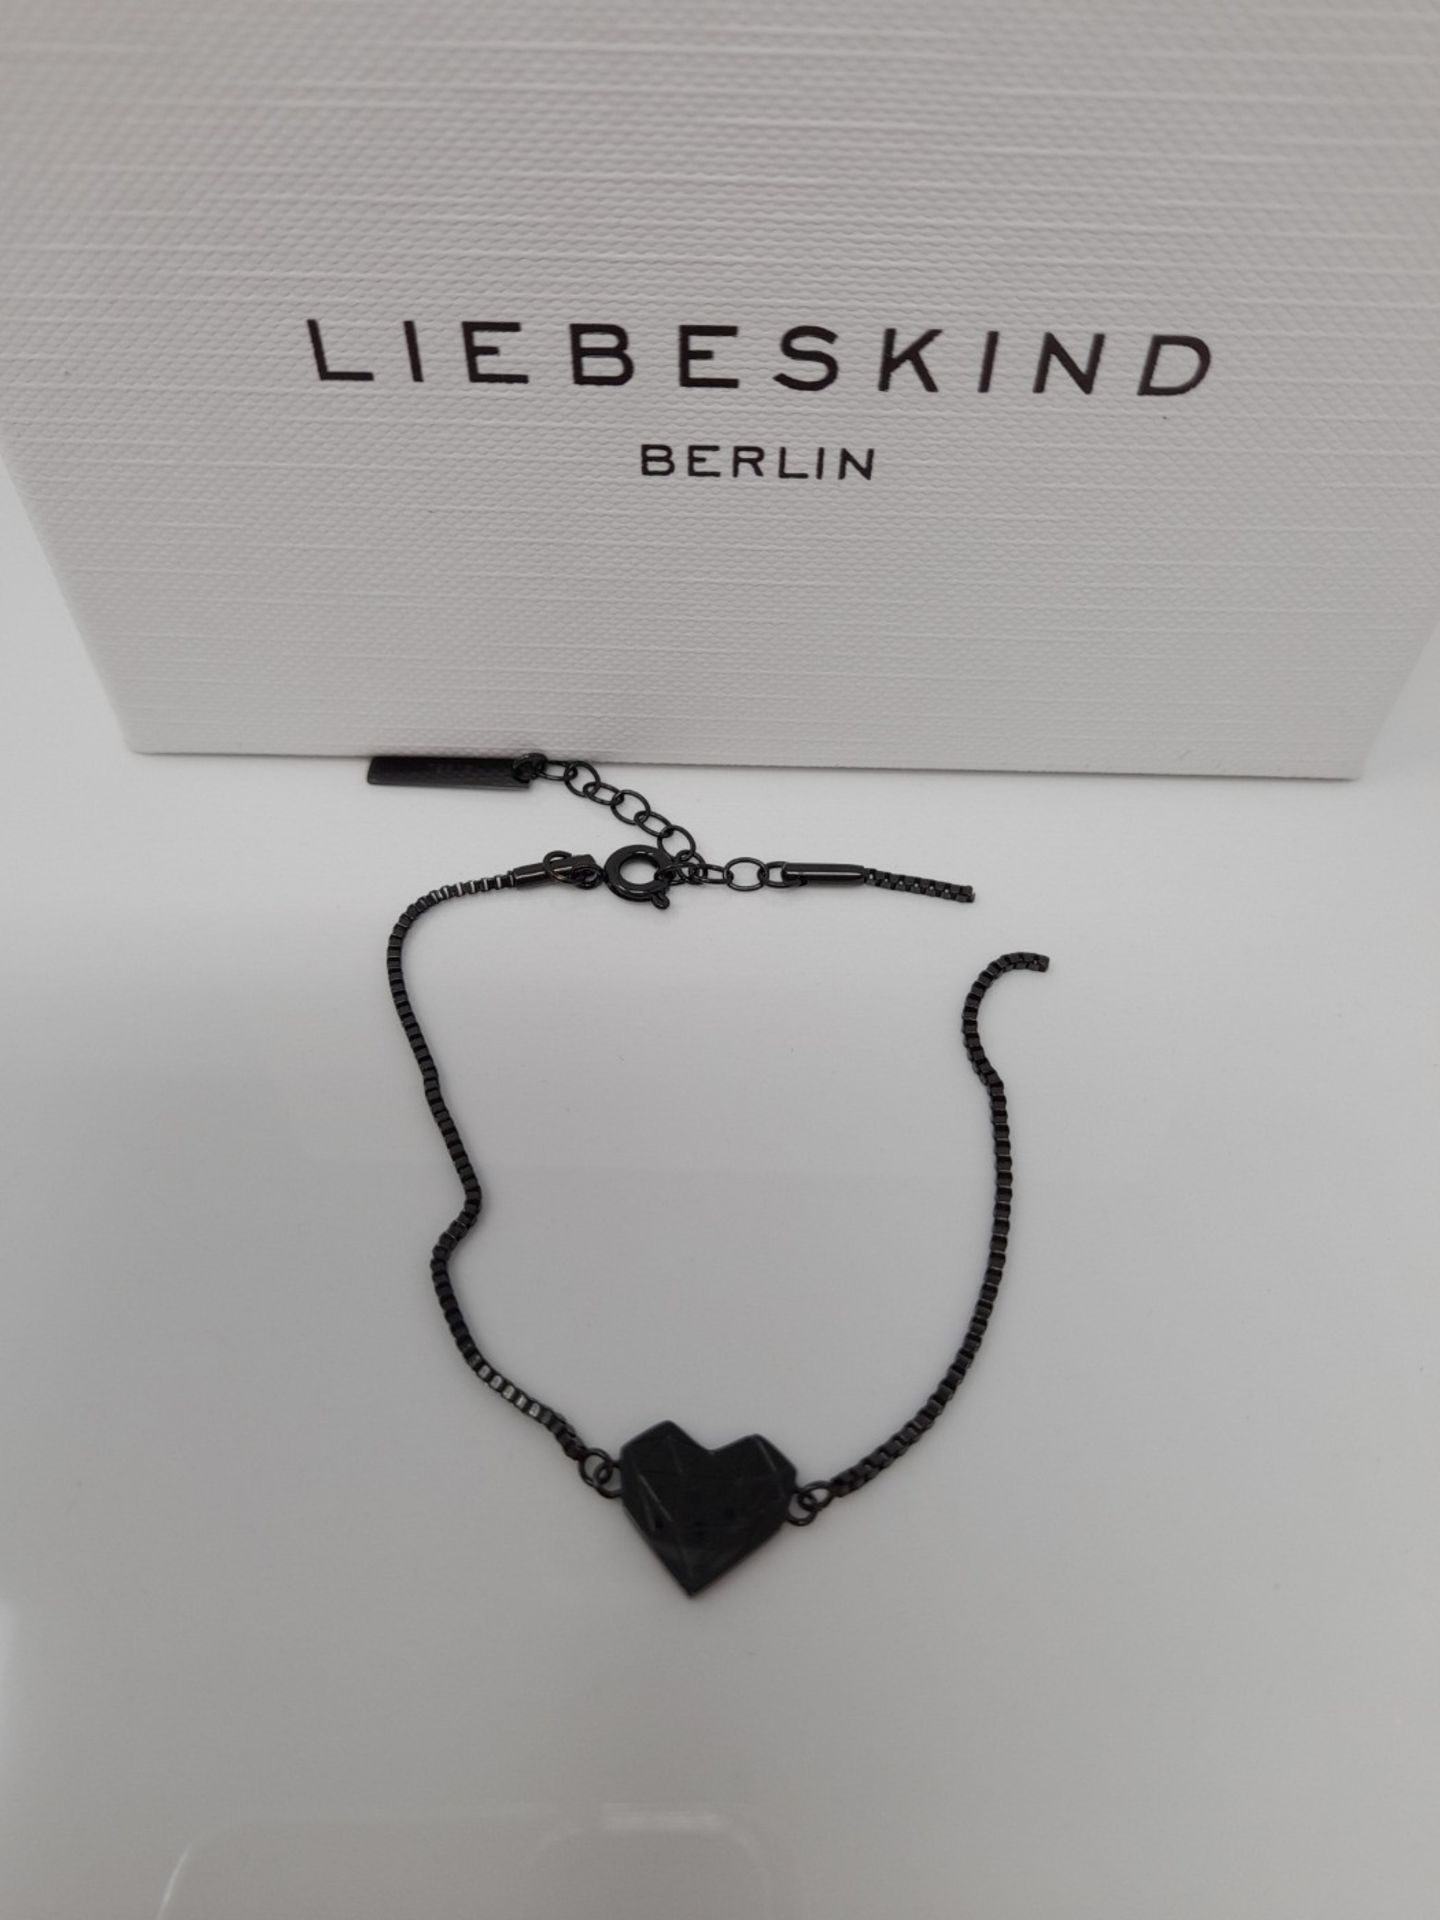 [CRACKED] Liebeskind Berlin Damen Armband Herz Edelstahl Silber 20 cm (schwarz), LJ-03 - Image 3 of 3